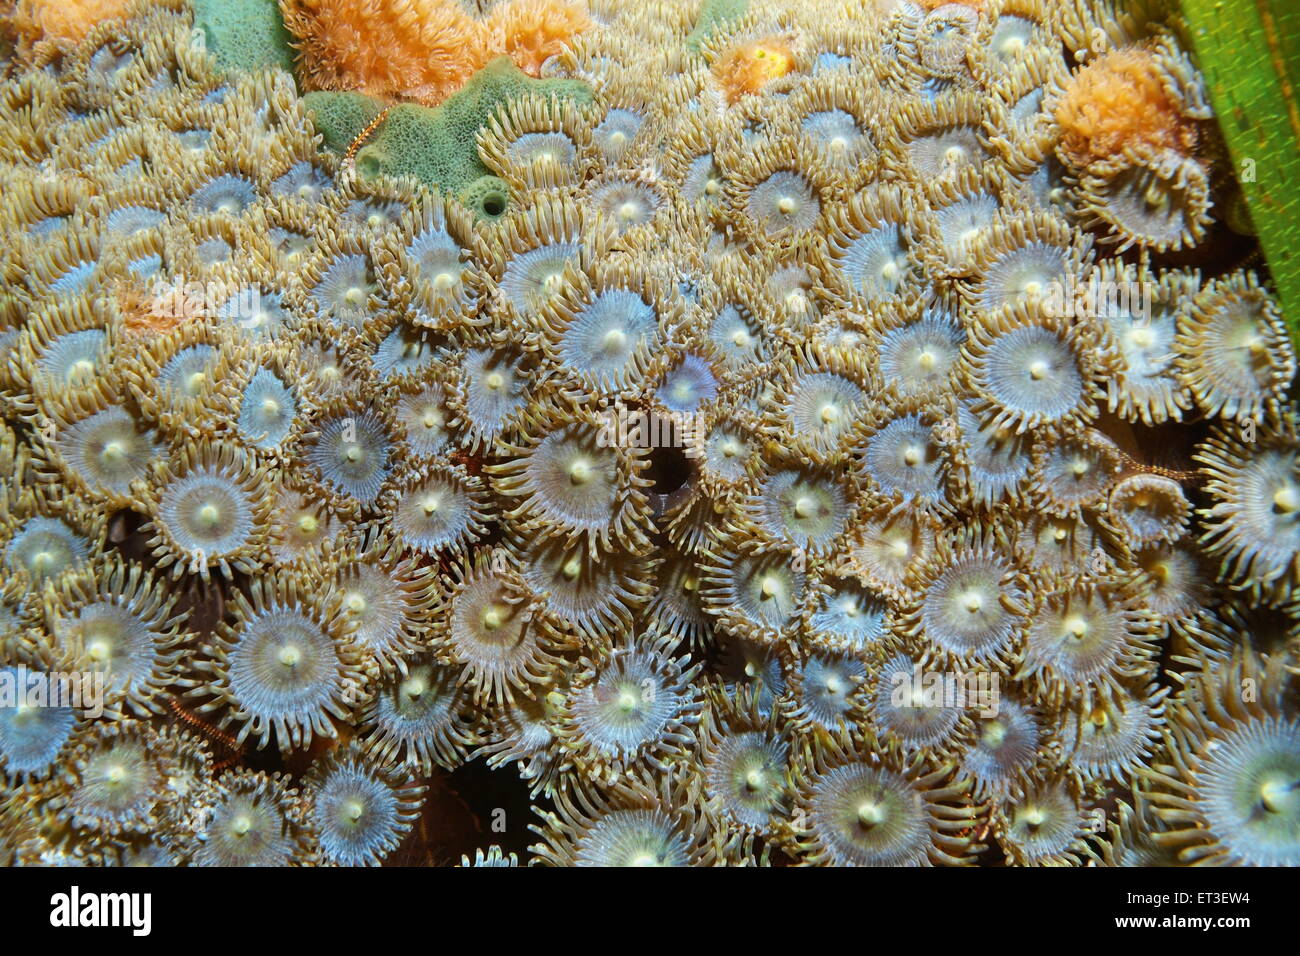 Underwater marine life, colony of Mat zoanthid, Zoanthus pulchellus, Caribbean sea Stock Photo